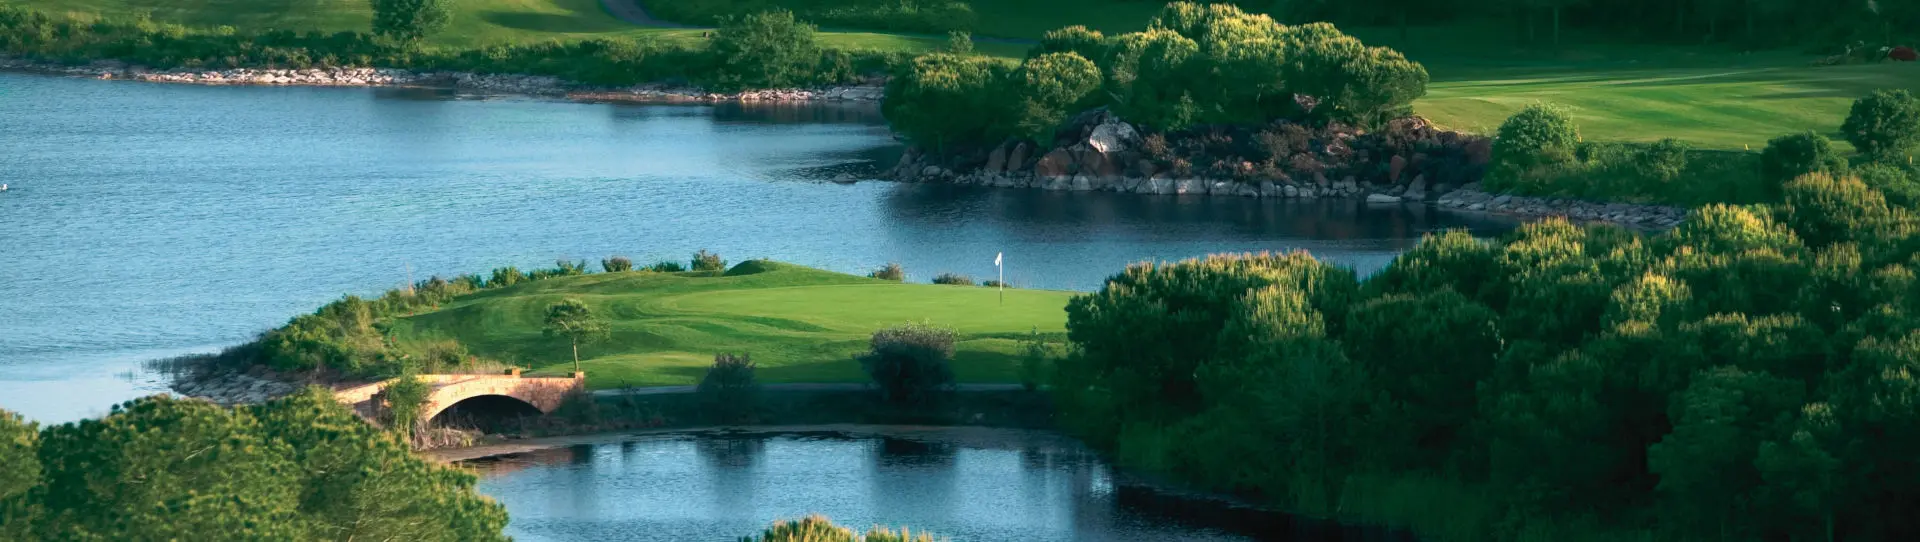 Spain golf courses - Almenara Golf Club - Photo 1